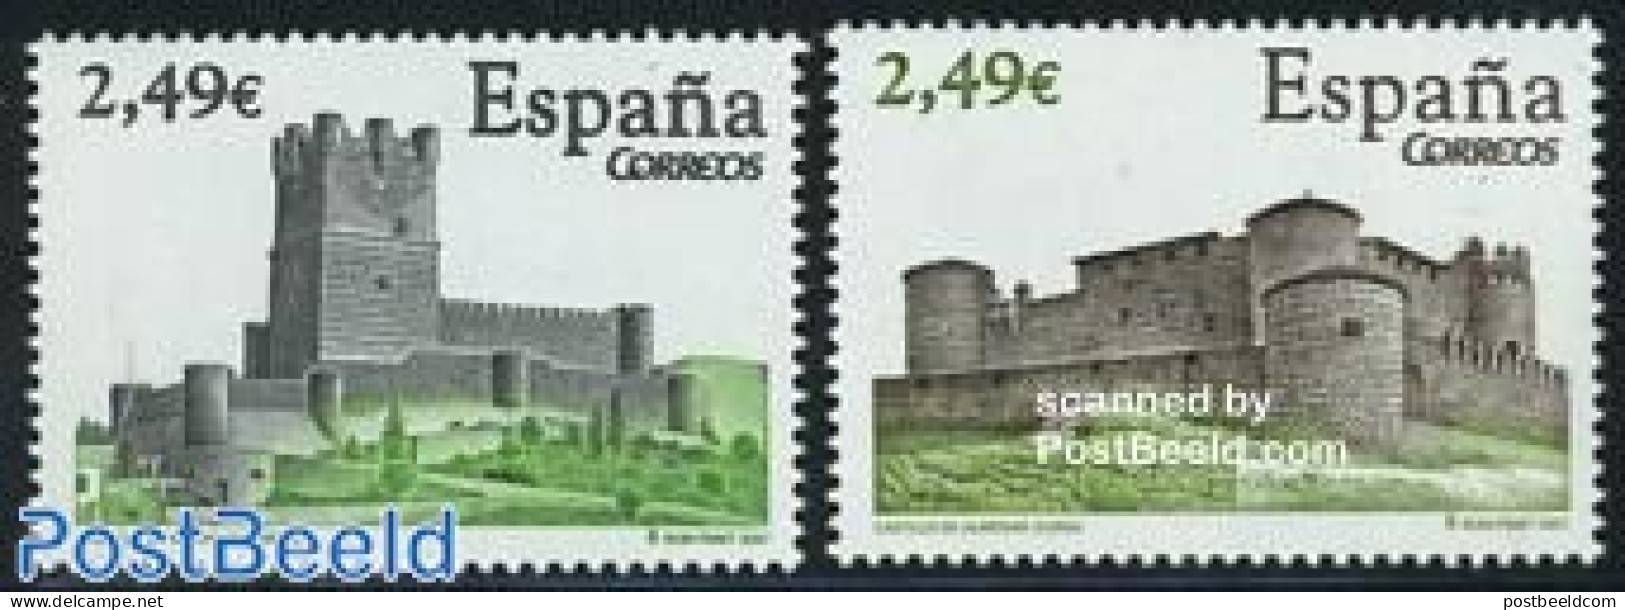 Spain 2007 Castles 2v, Mint NH, Art - Castles & Fortifications - Ongebruikt